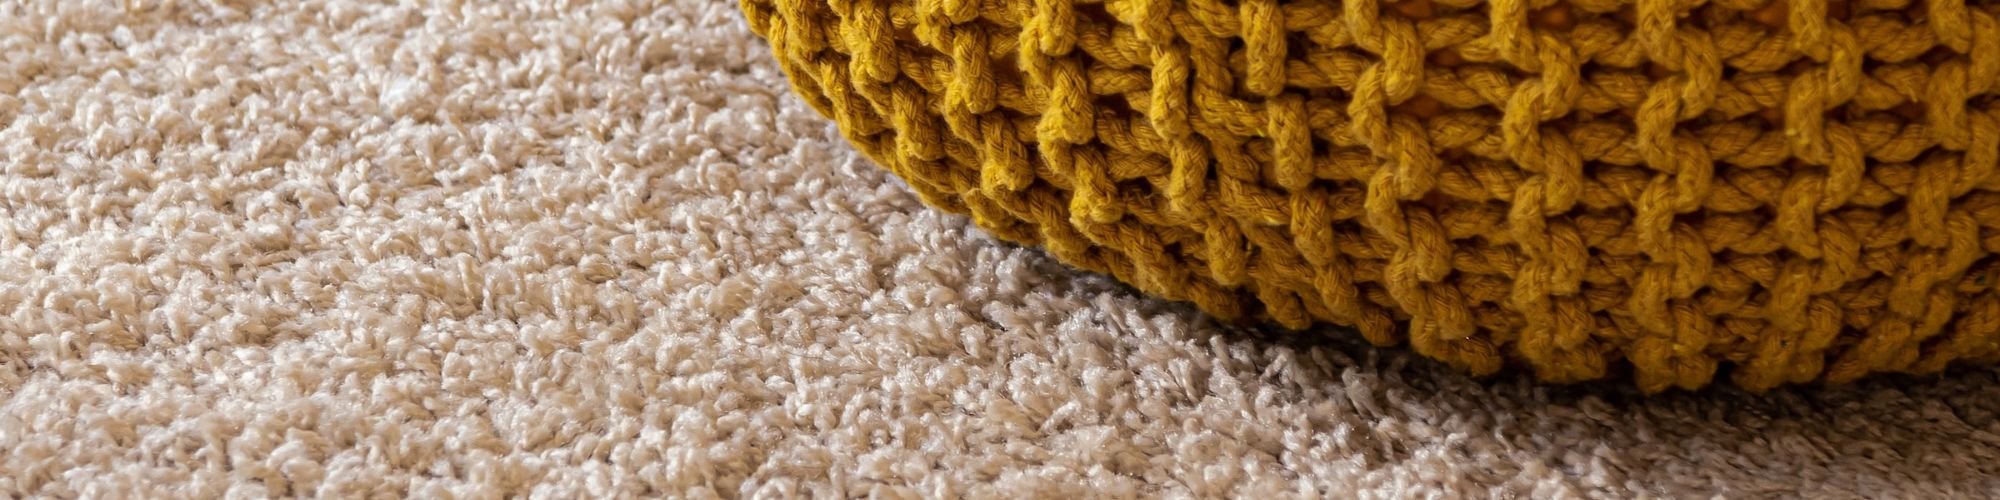 Carpet closeup with yellow ottoman